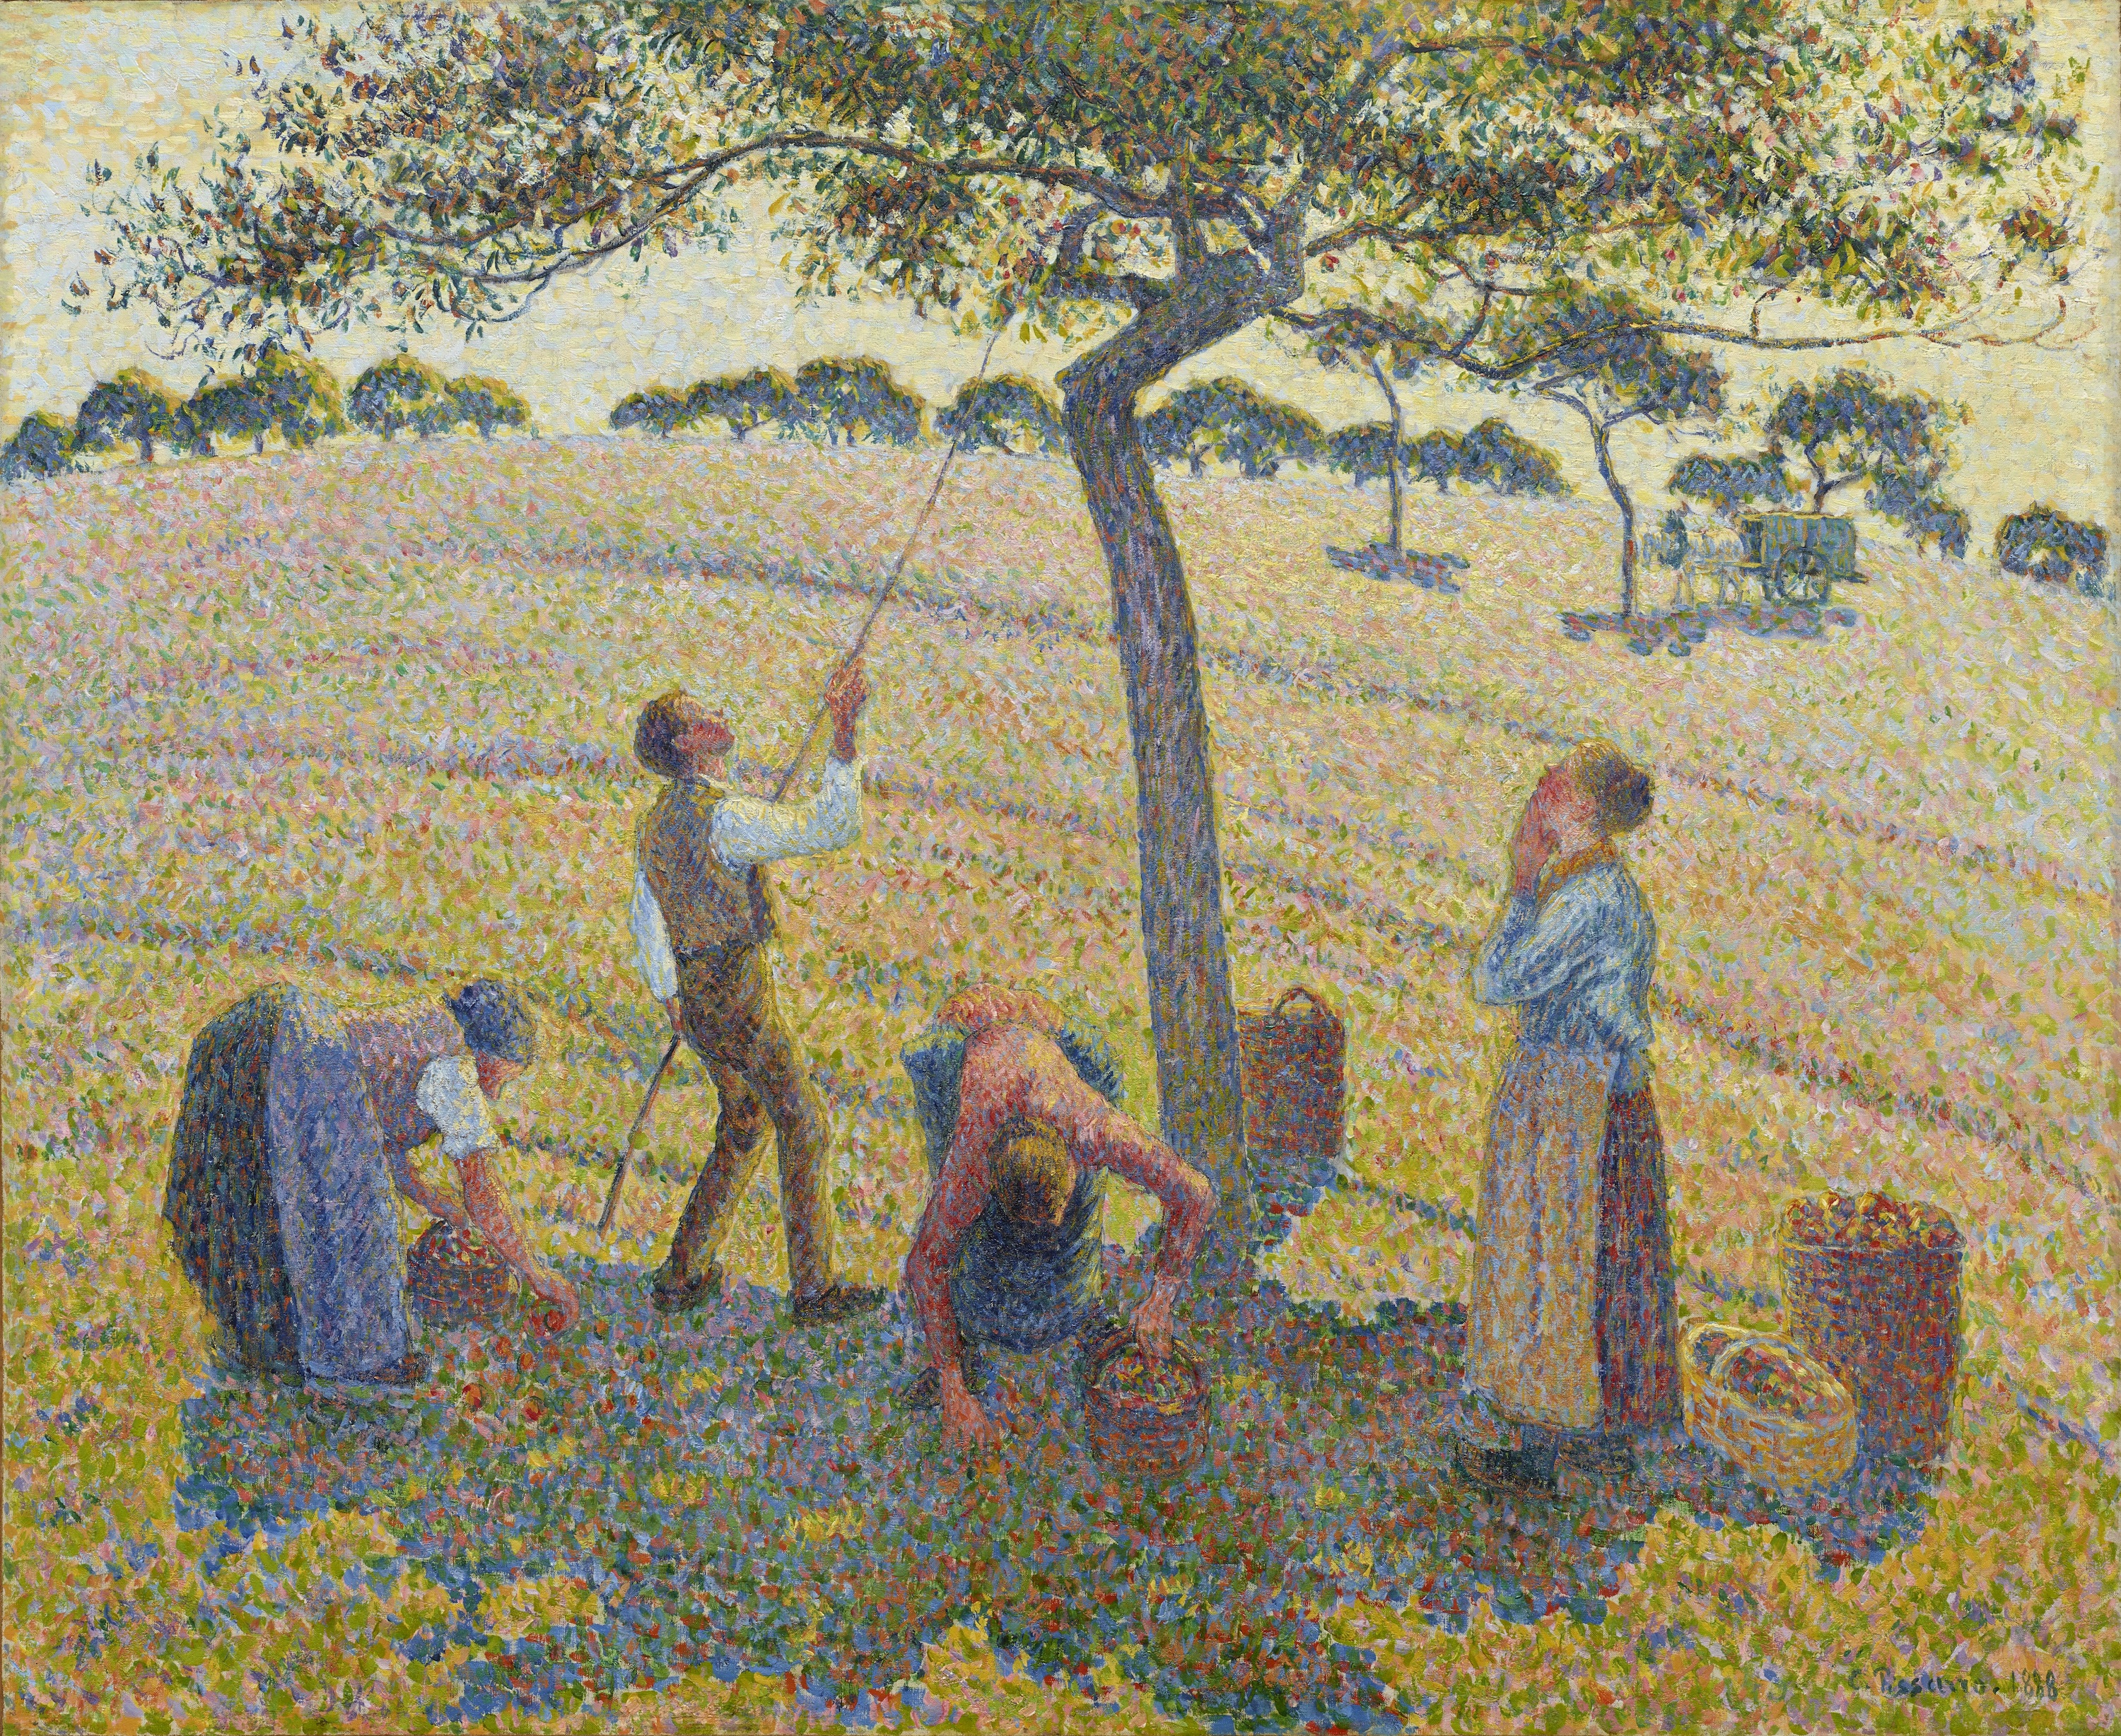 Die Apfelernte by Camille Pissarro - 1888 - 61 x 74 cm Dallas Museum of Art